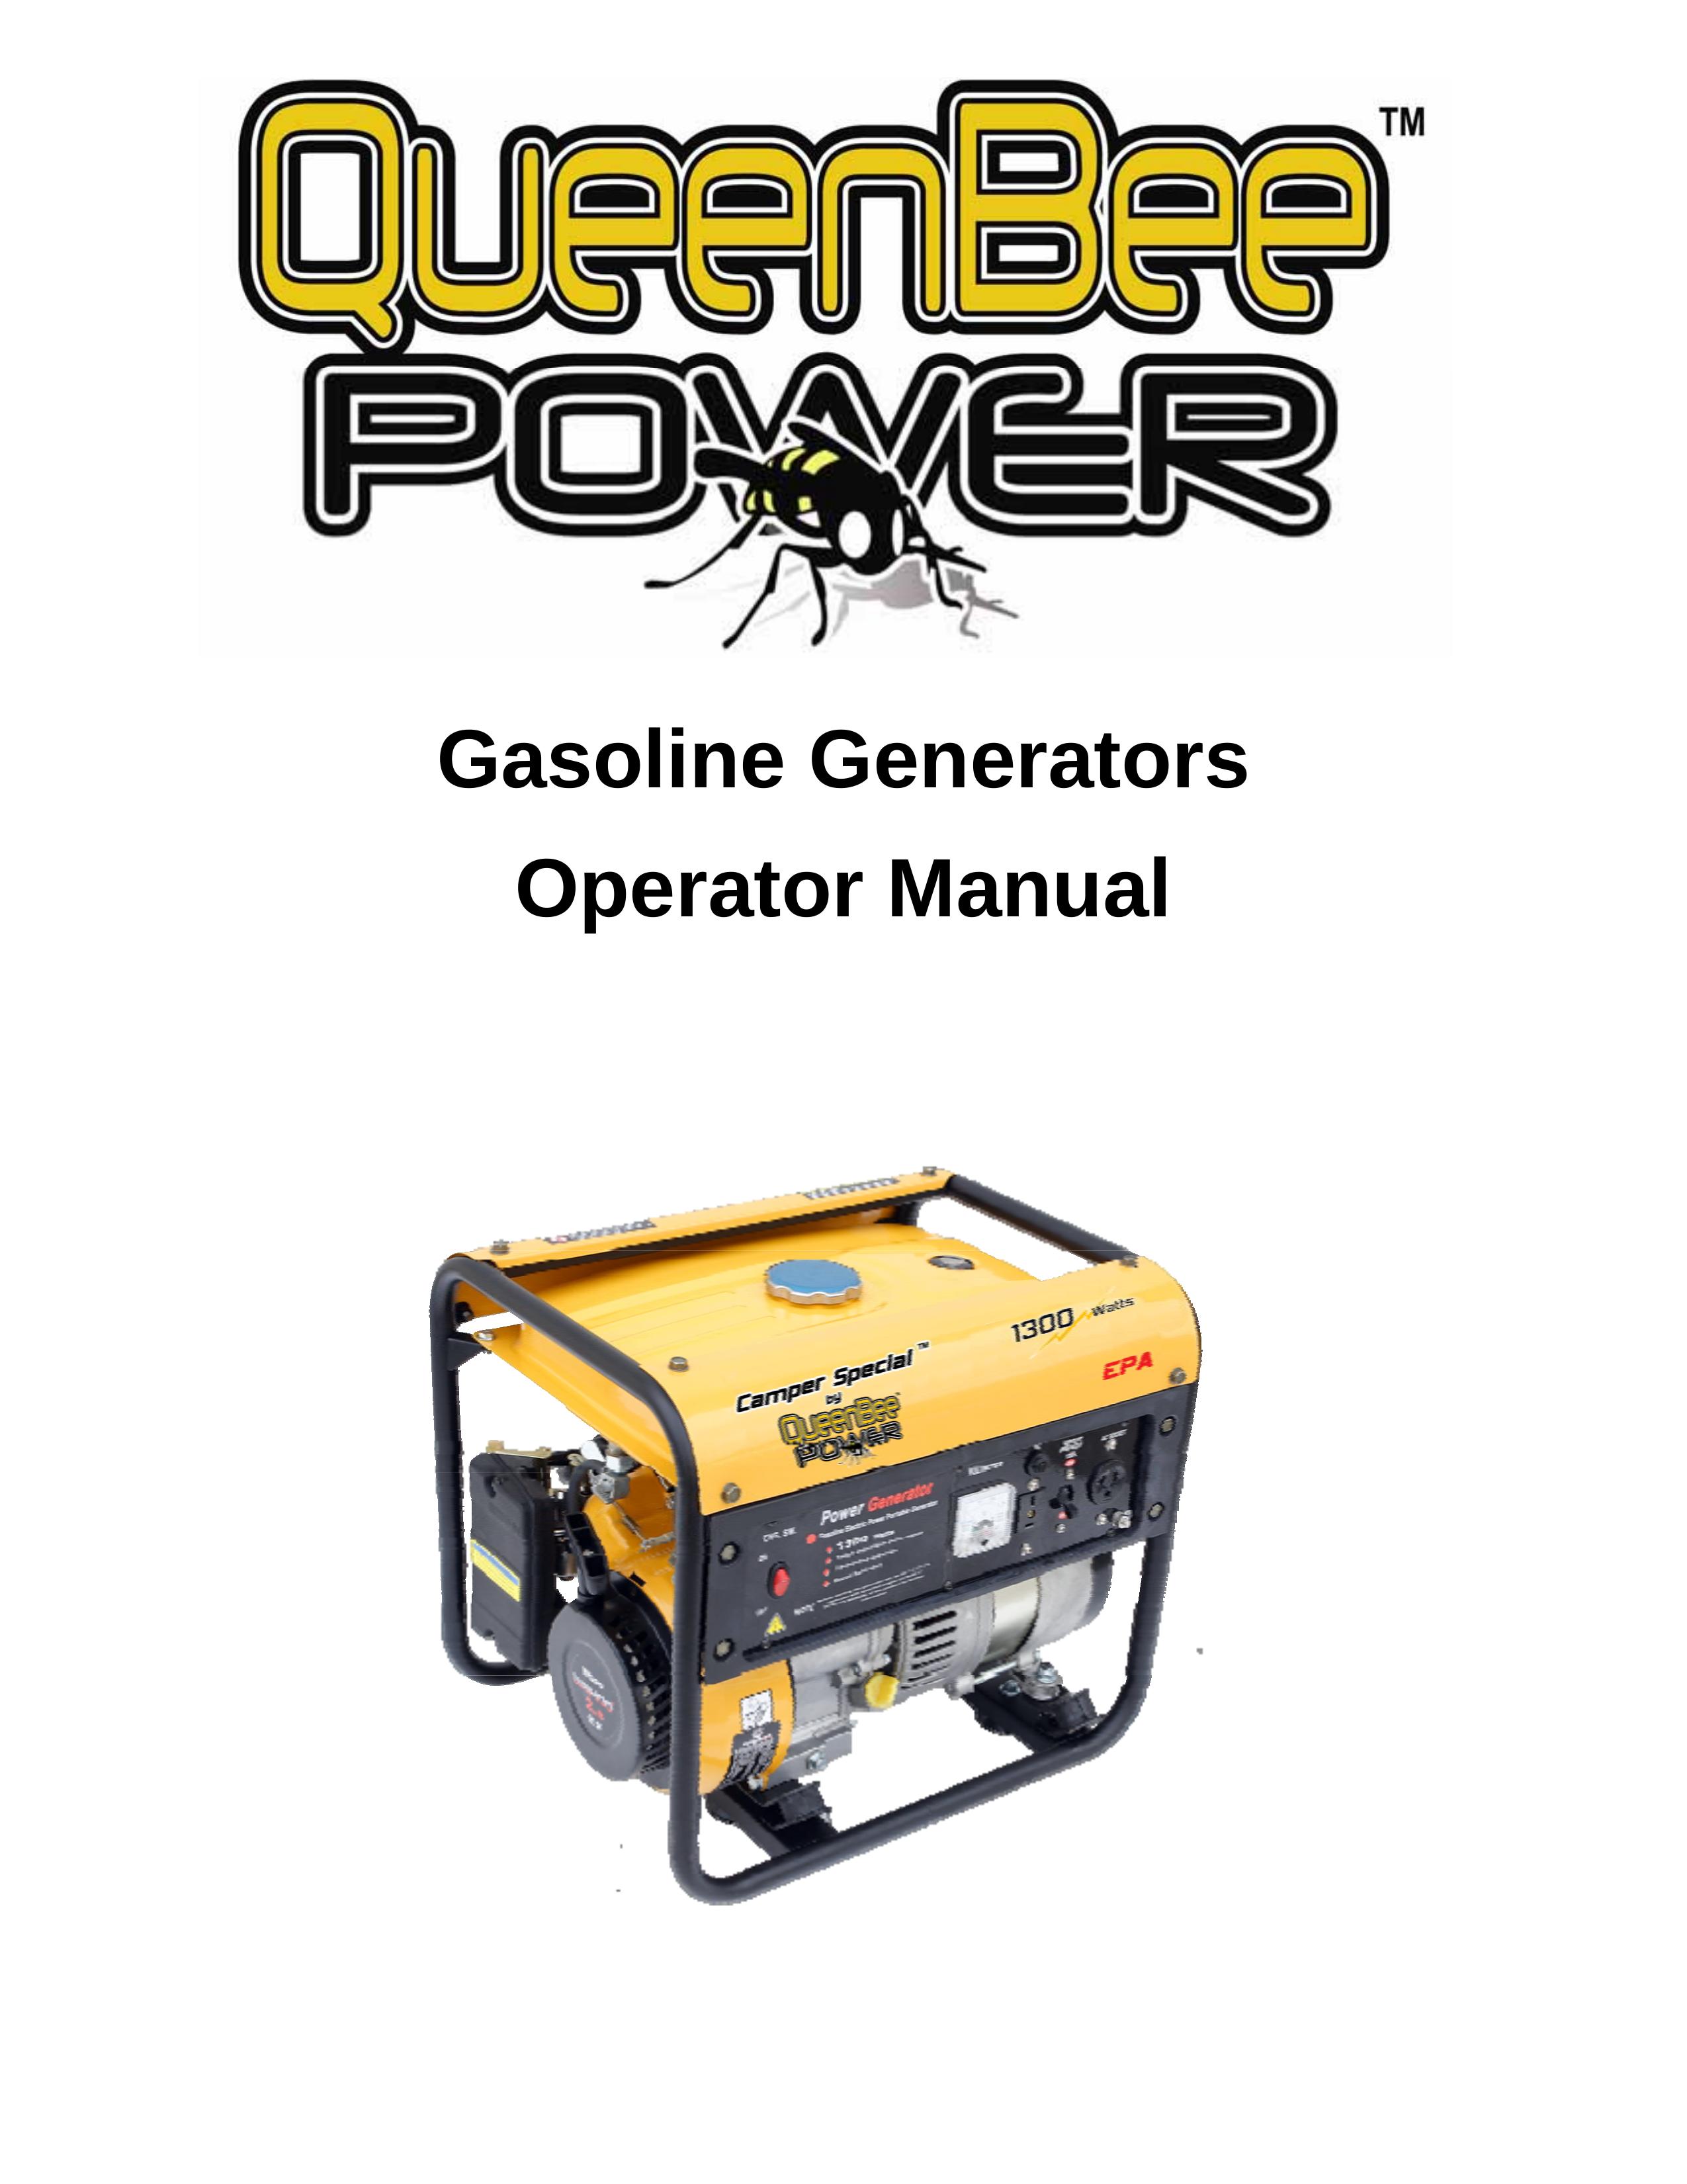 Electrolux QB3300 Portable Generator User Manual